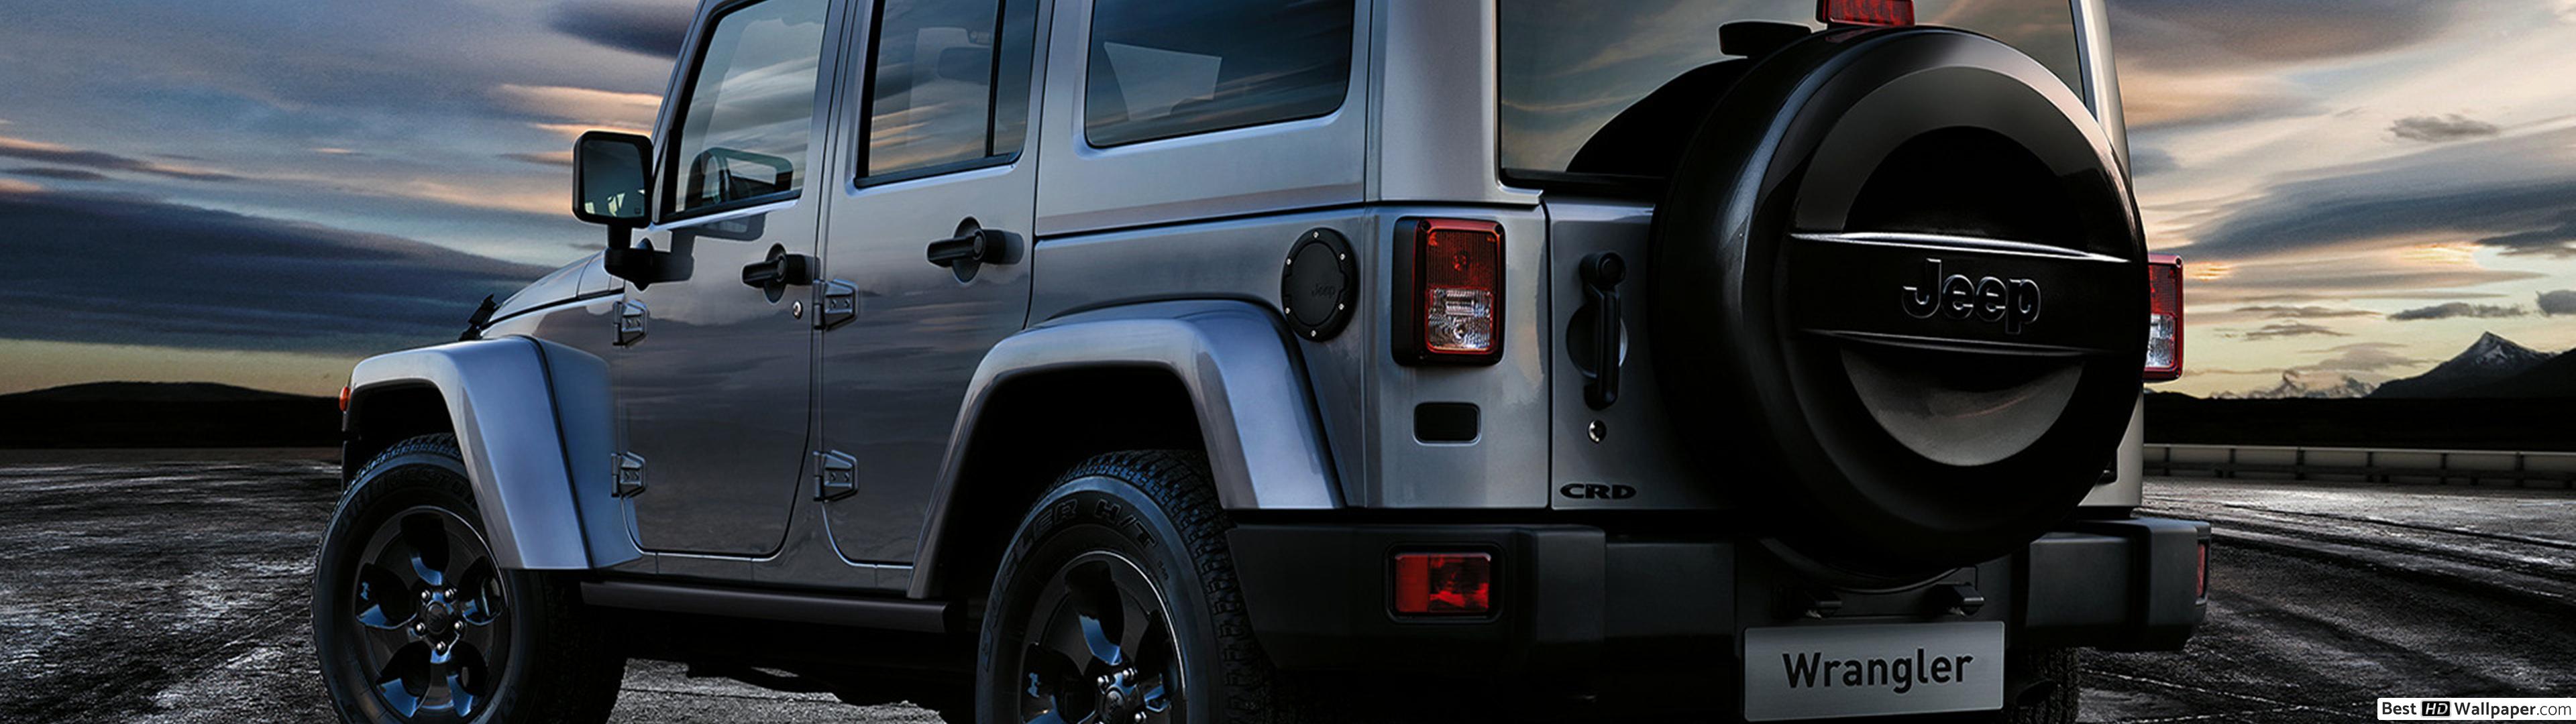 Back Brakes For A Jeep Wrangler - HD Wallpaper 